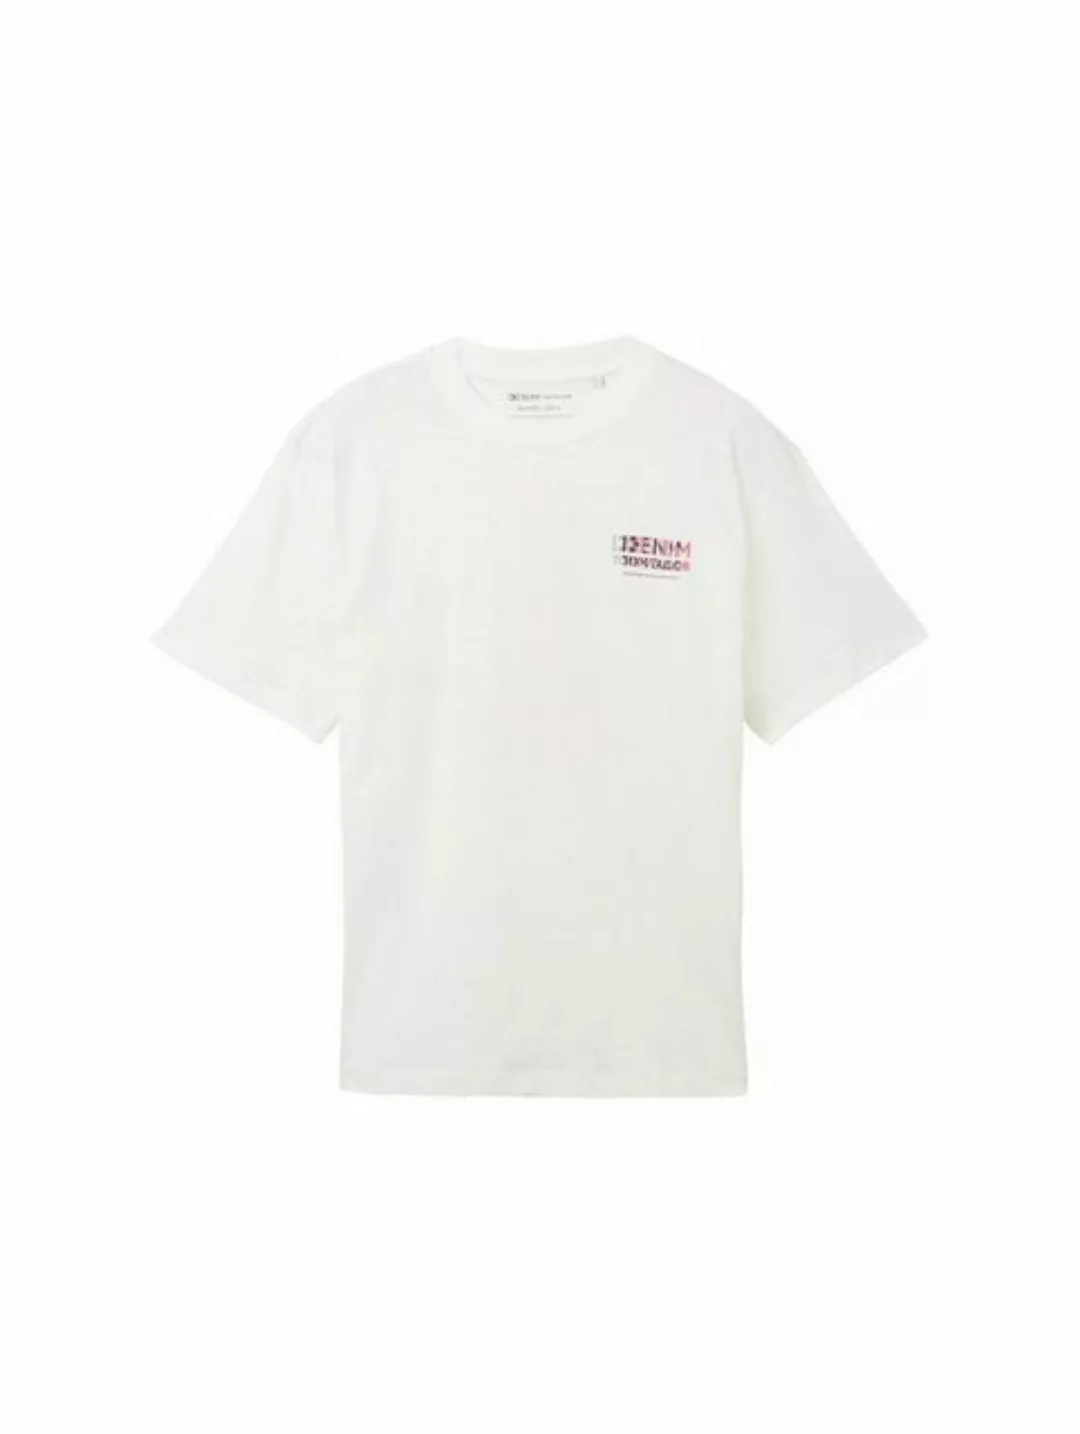 TOM TAILOR Denim T-Shirt relaxed photoprinted t-shirt günstig online kaufen